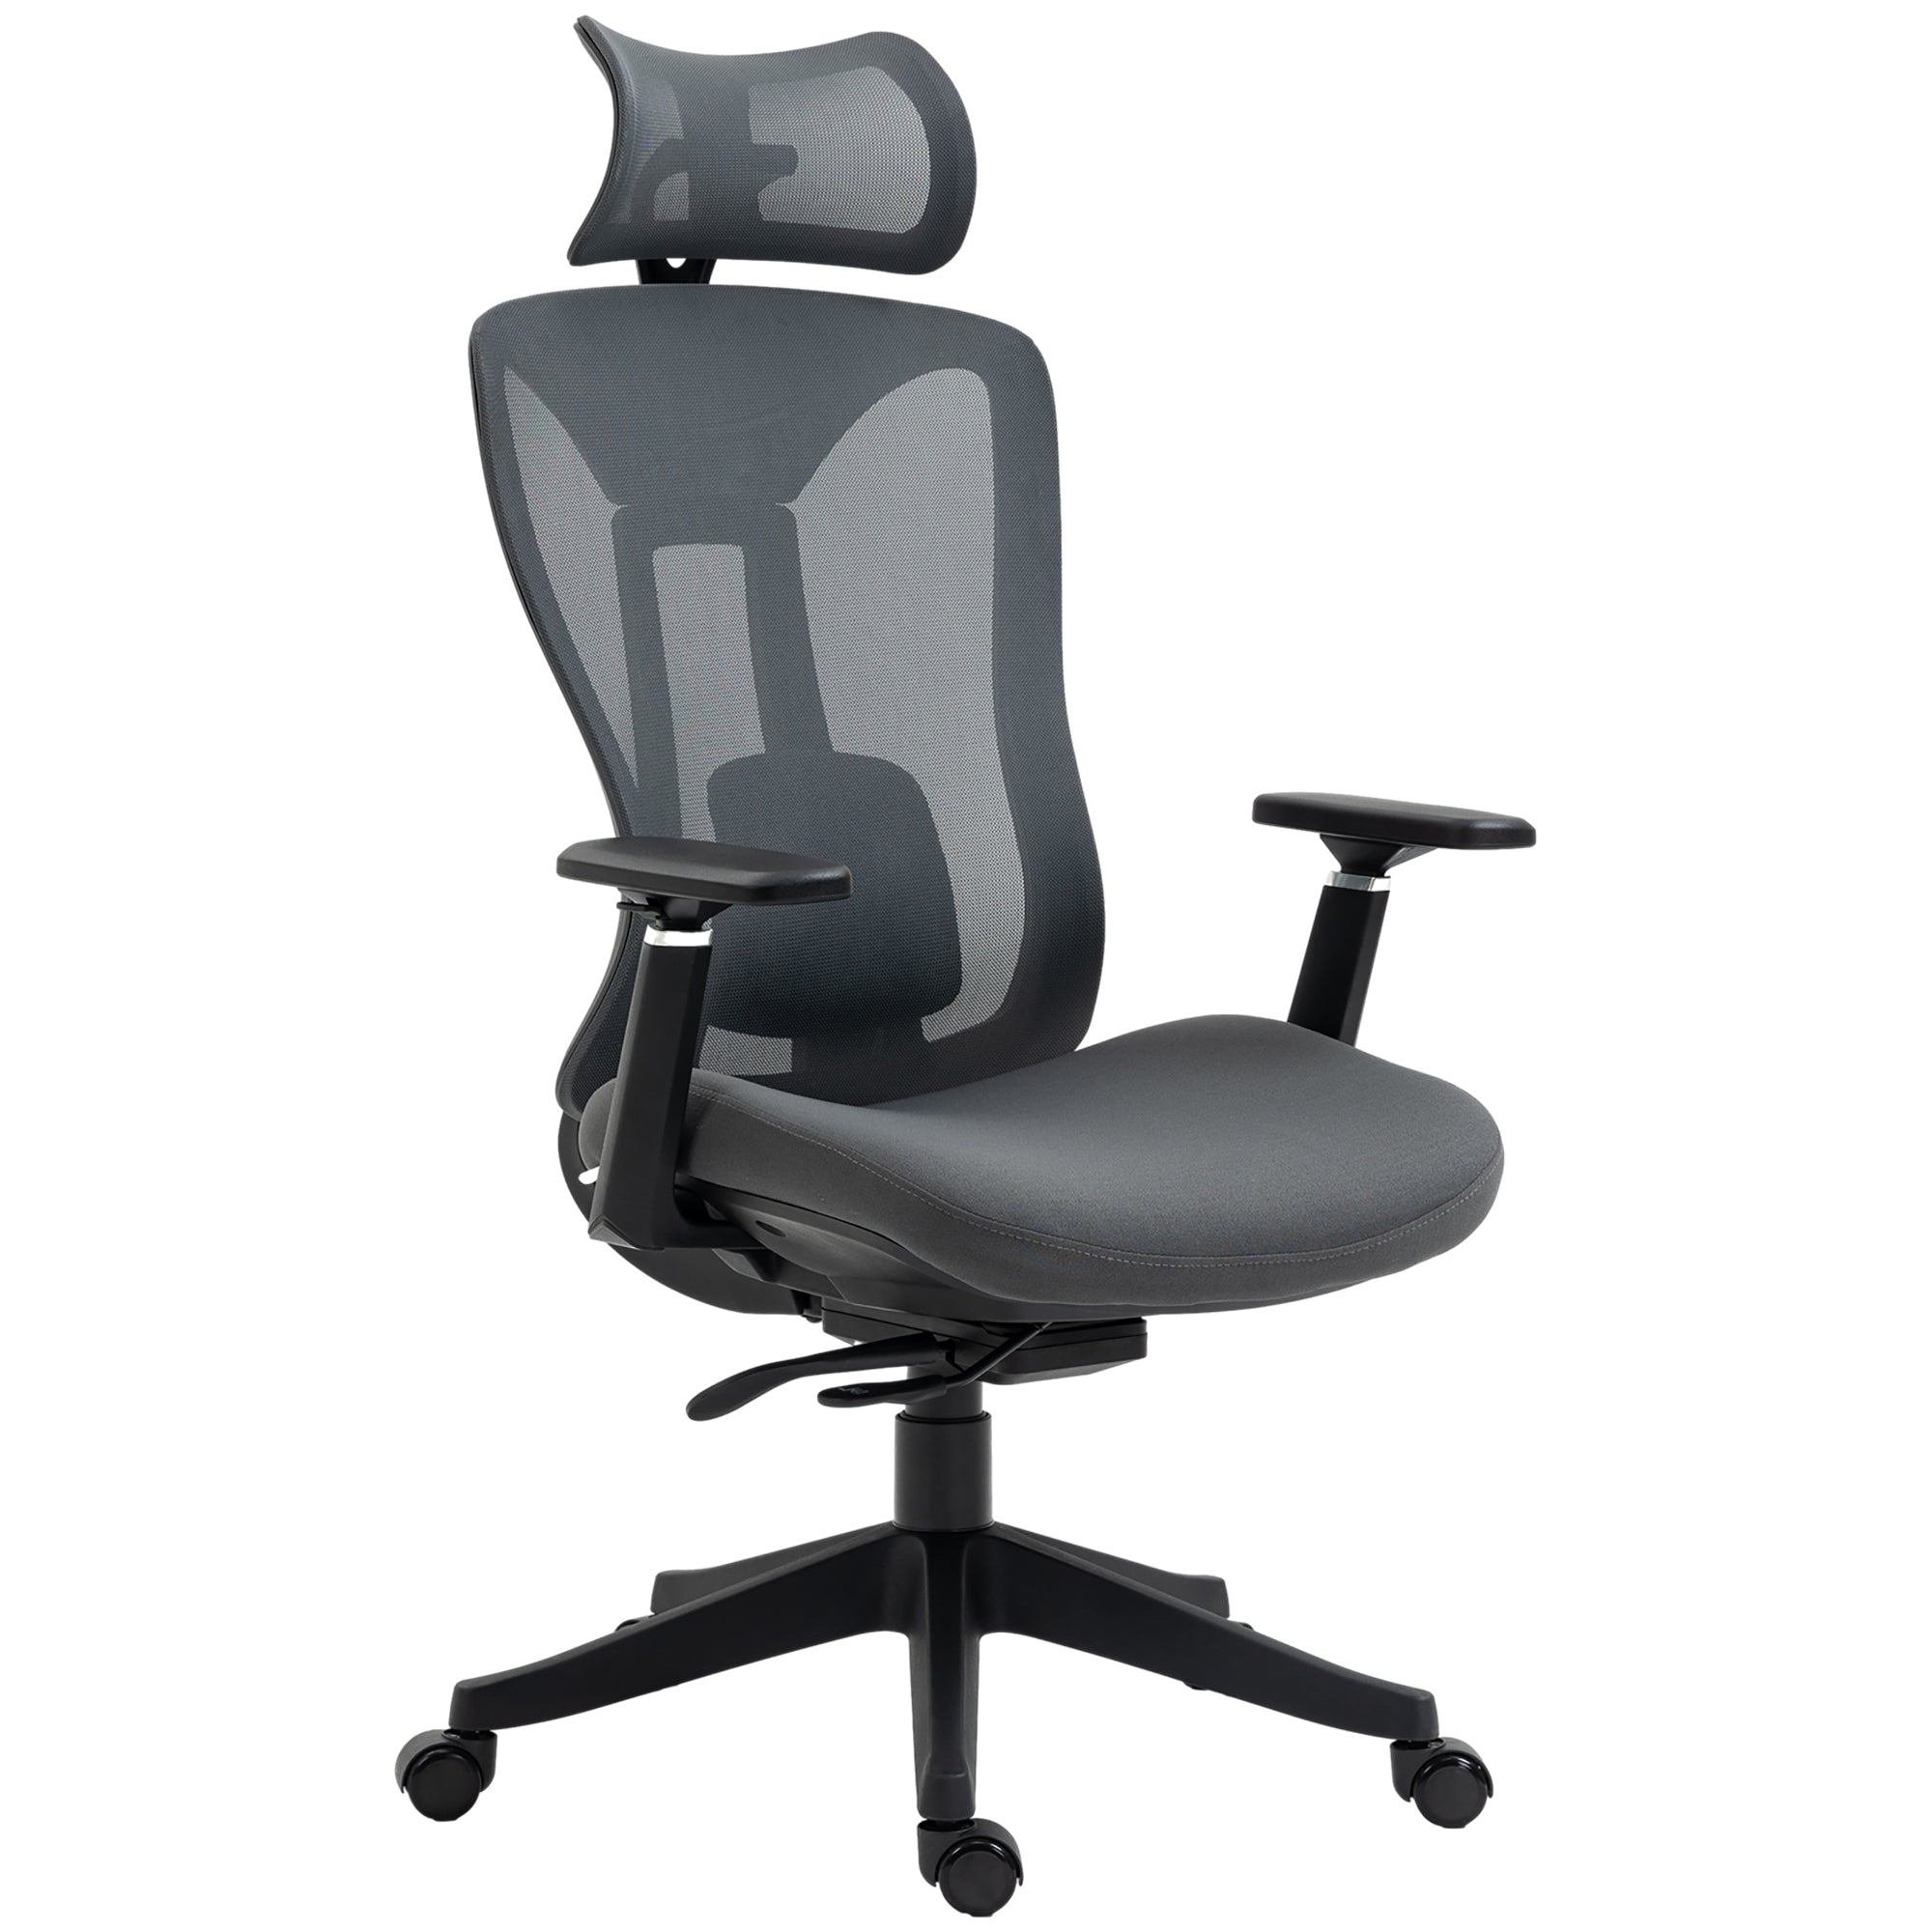 Mesh Office Chair, Reclining Desk Chair with Adjustable Headrest, Lumbar Support, 3D Armrest, Sliding Seat, Swivel Wheels, Grey-0